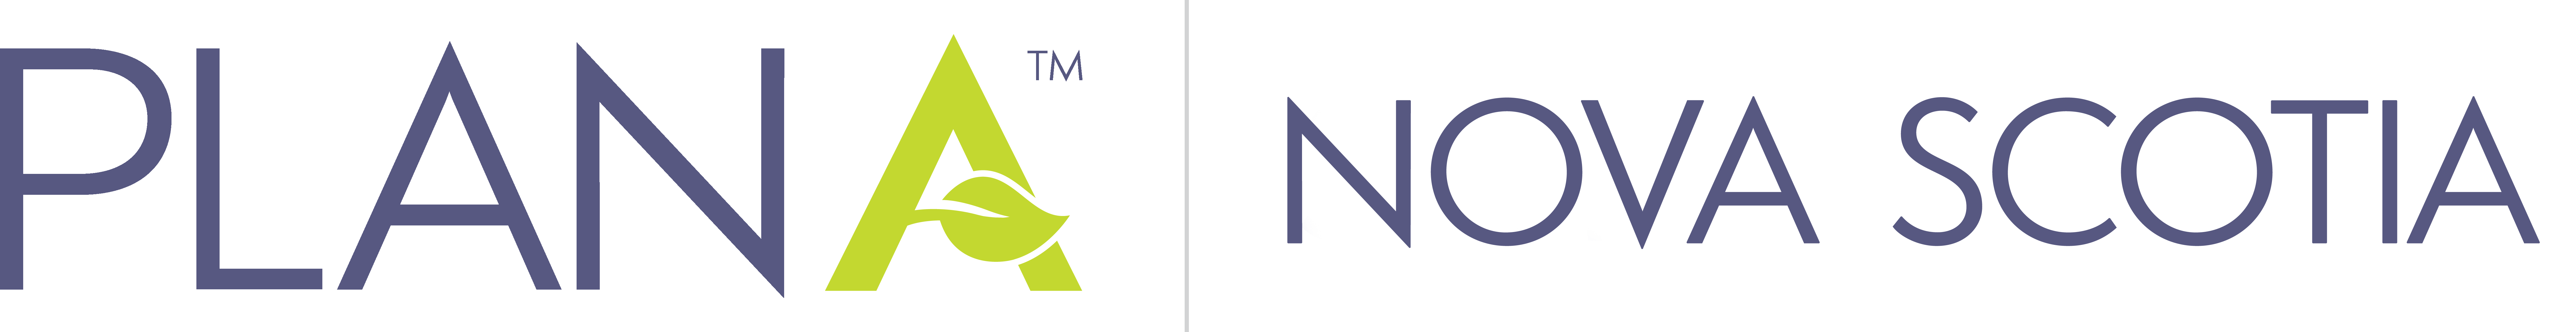 Plan-A-NovaScotia-logo